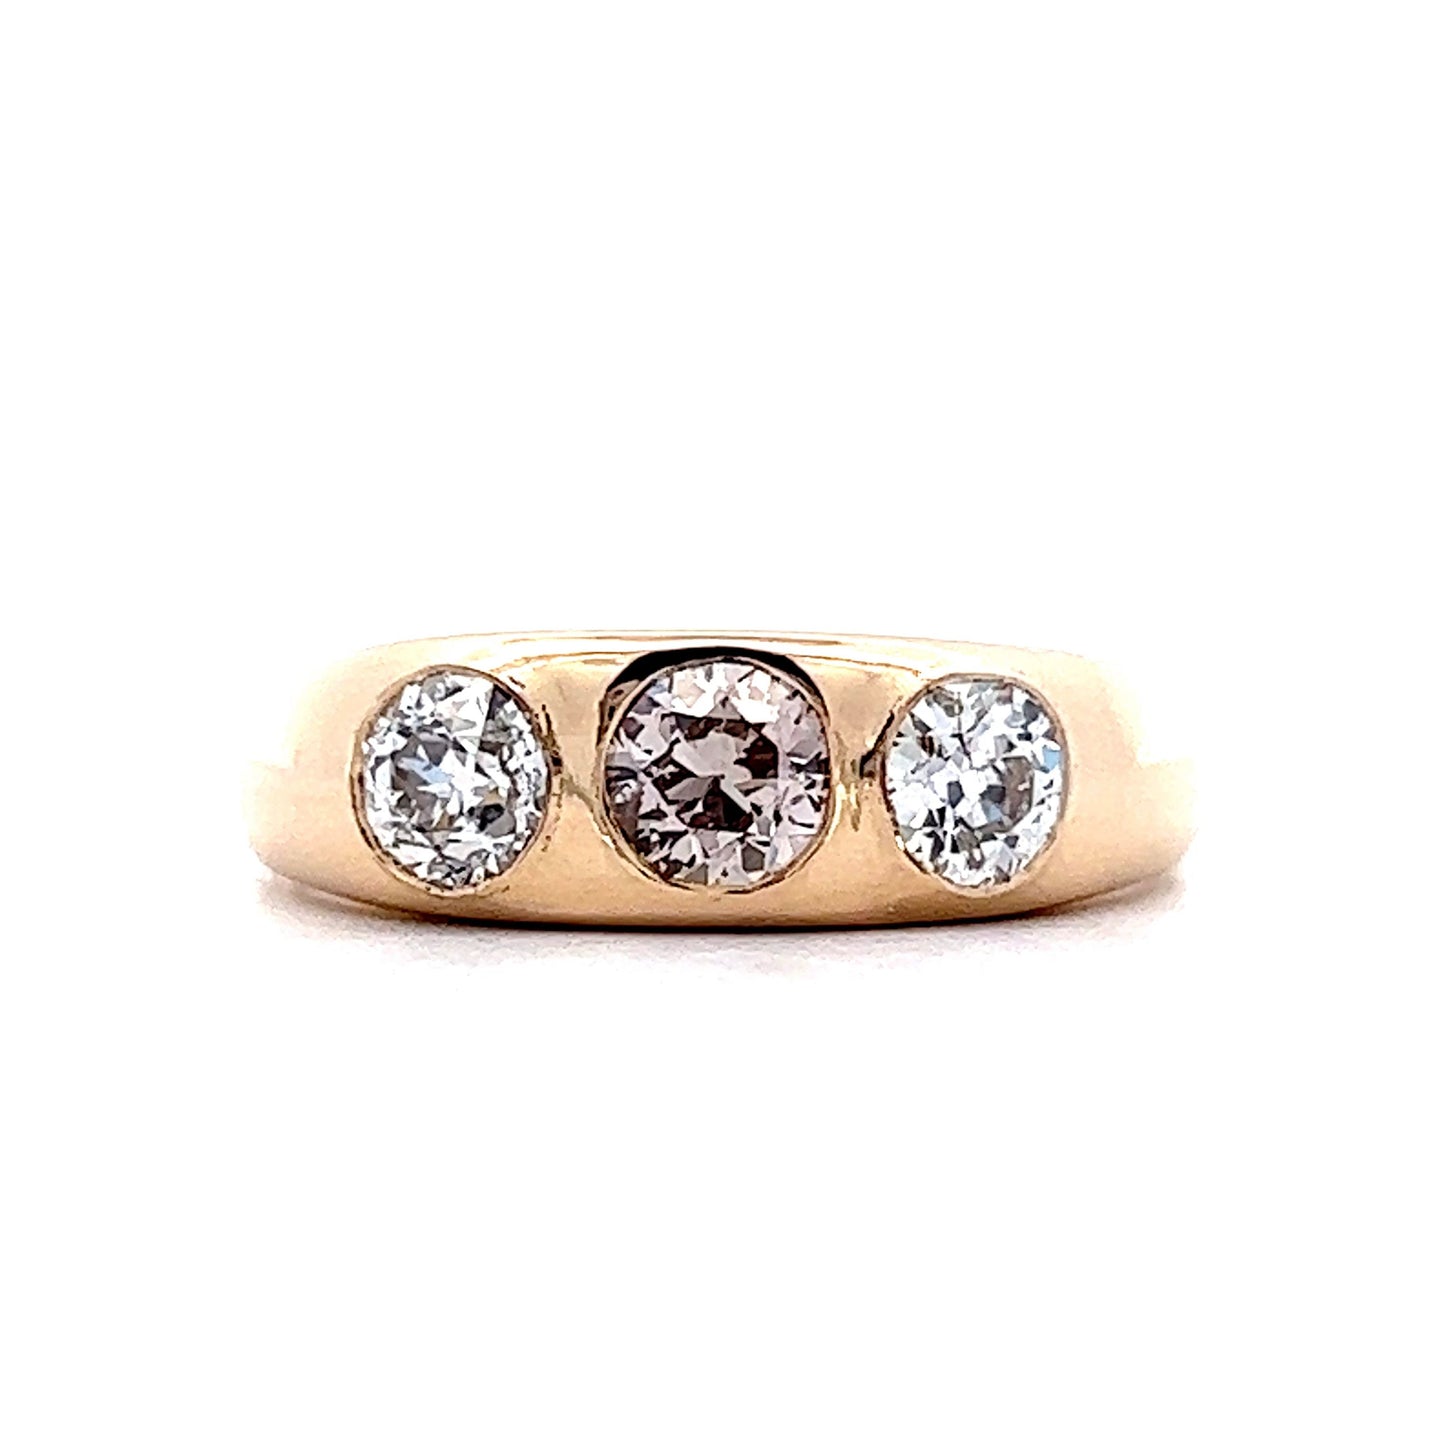 Vintage Men's Diamond Three Stone Ring in 14k Yellow Gold